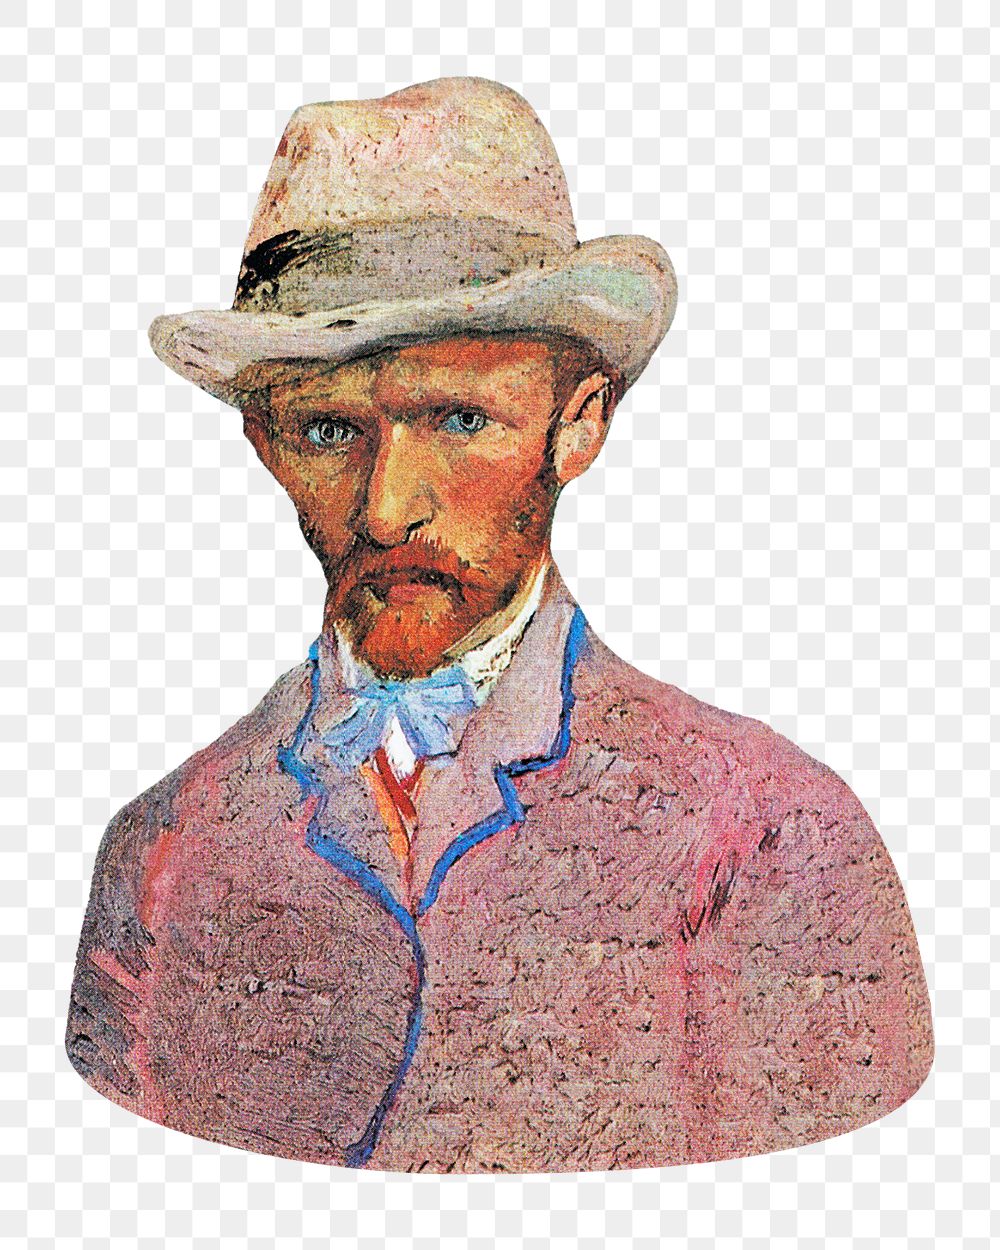 Png Van Gogh&rsquo;s self-portrait sticker, vintage artwork, transparent background, remixed by rawpixel